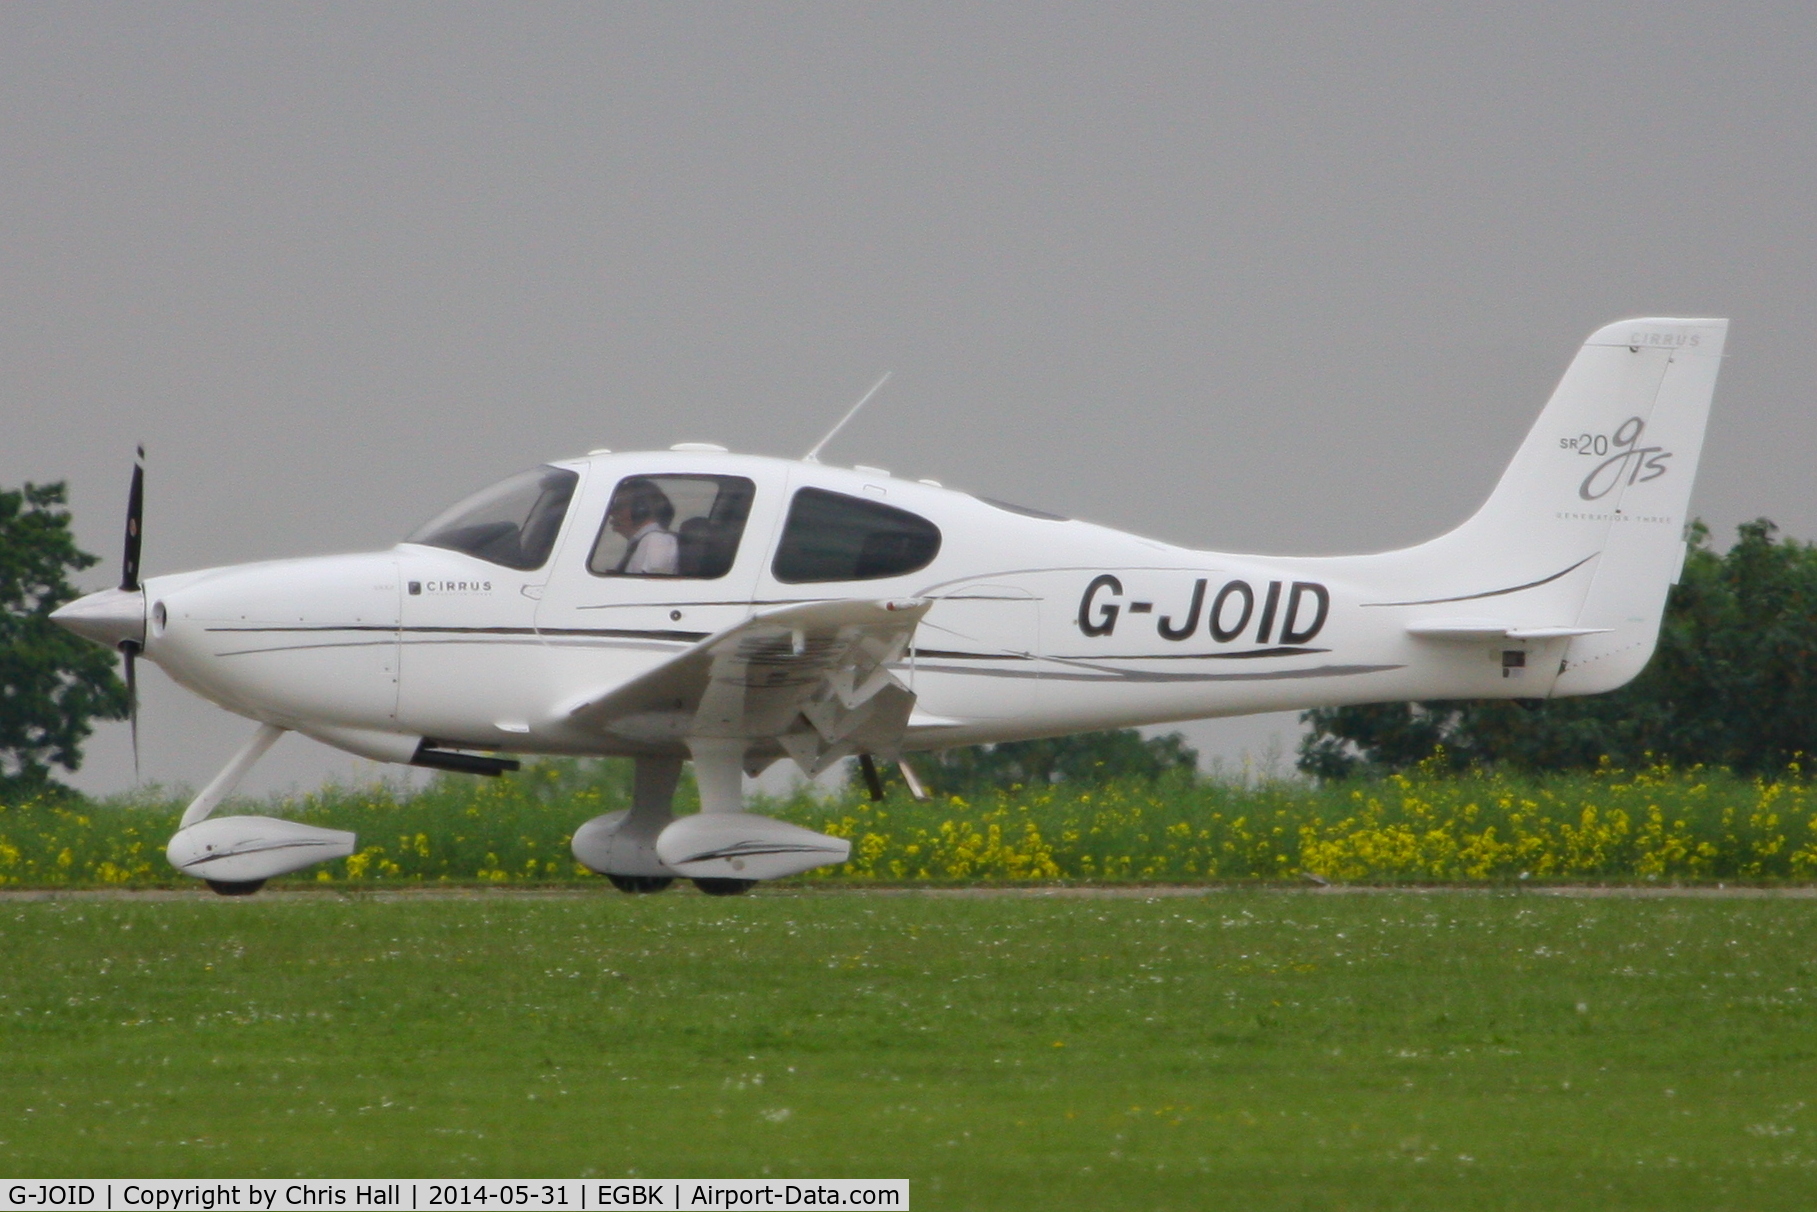 G-JOID, 2008 Cirrus SR20 G3 GTS C/N 1910, at AeroExpo 2014